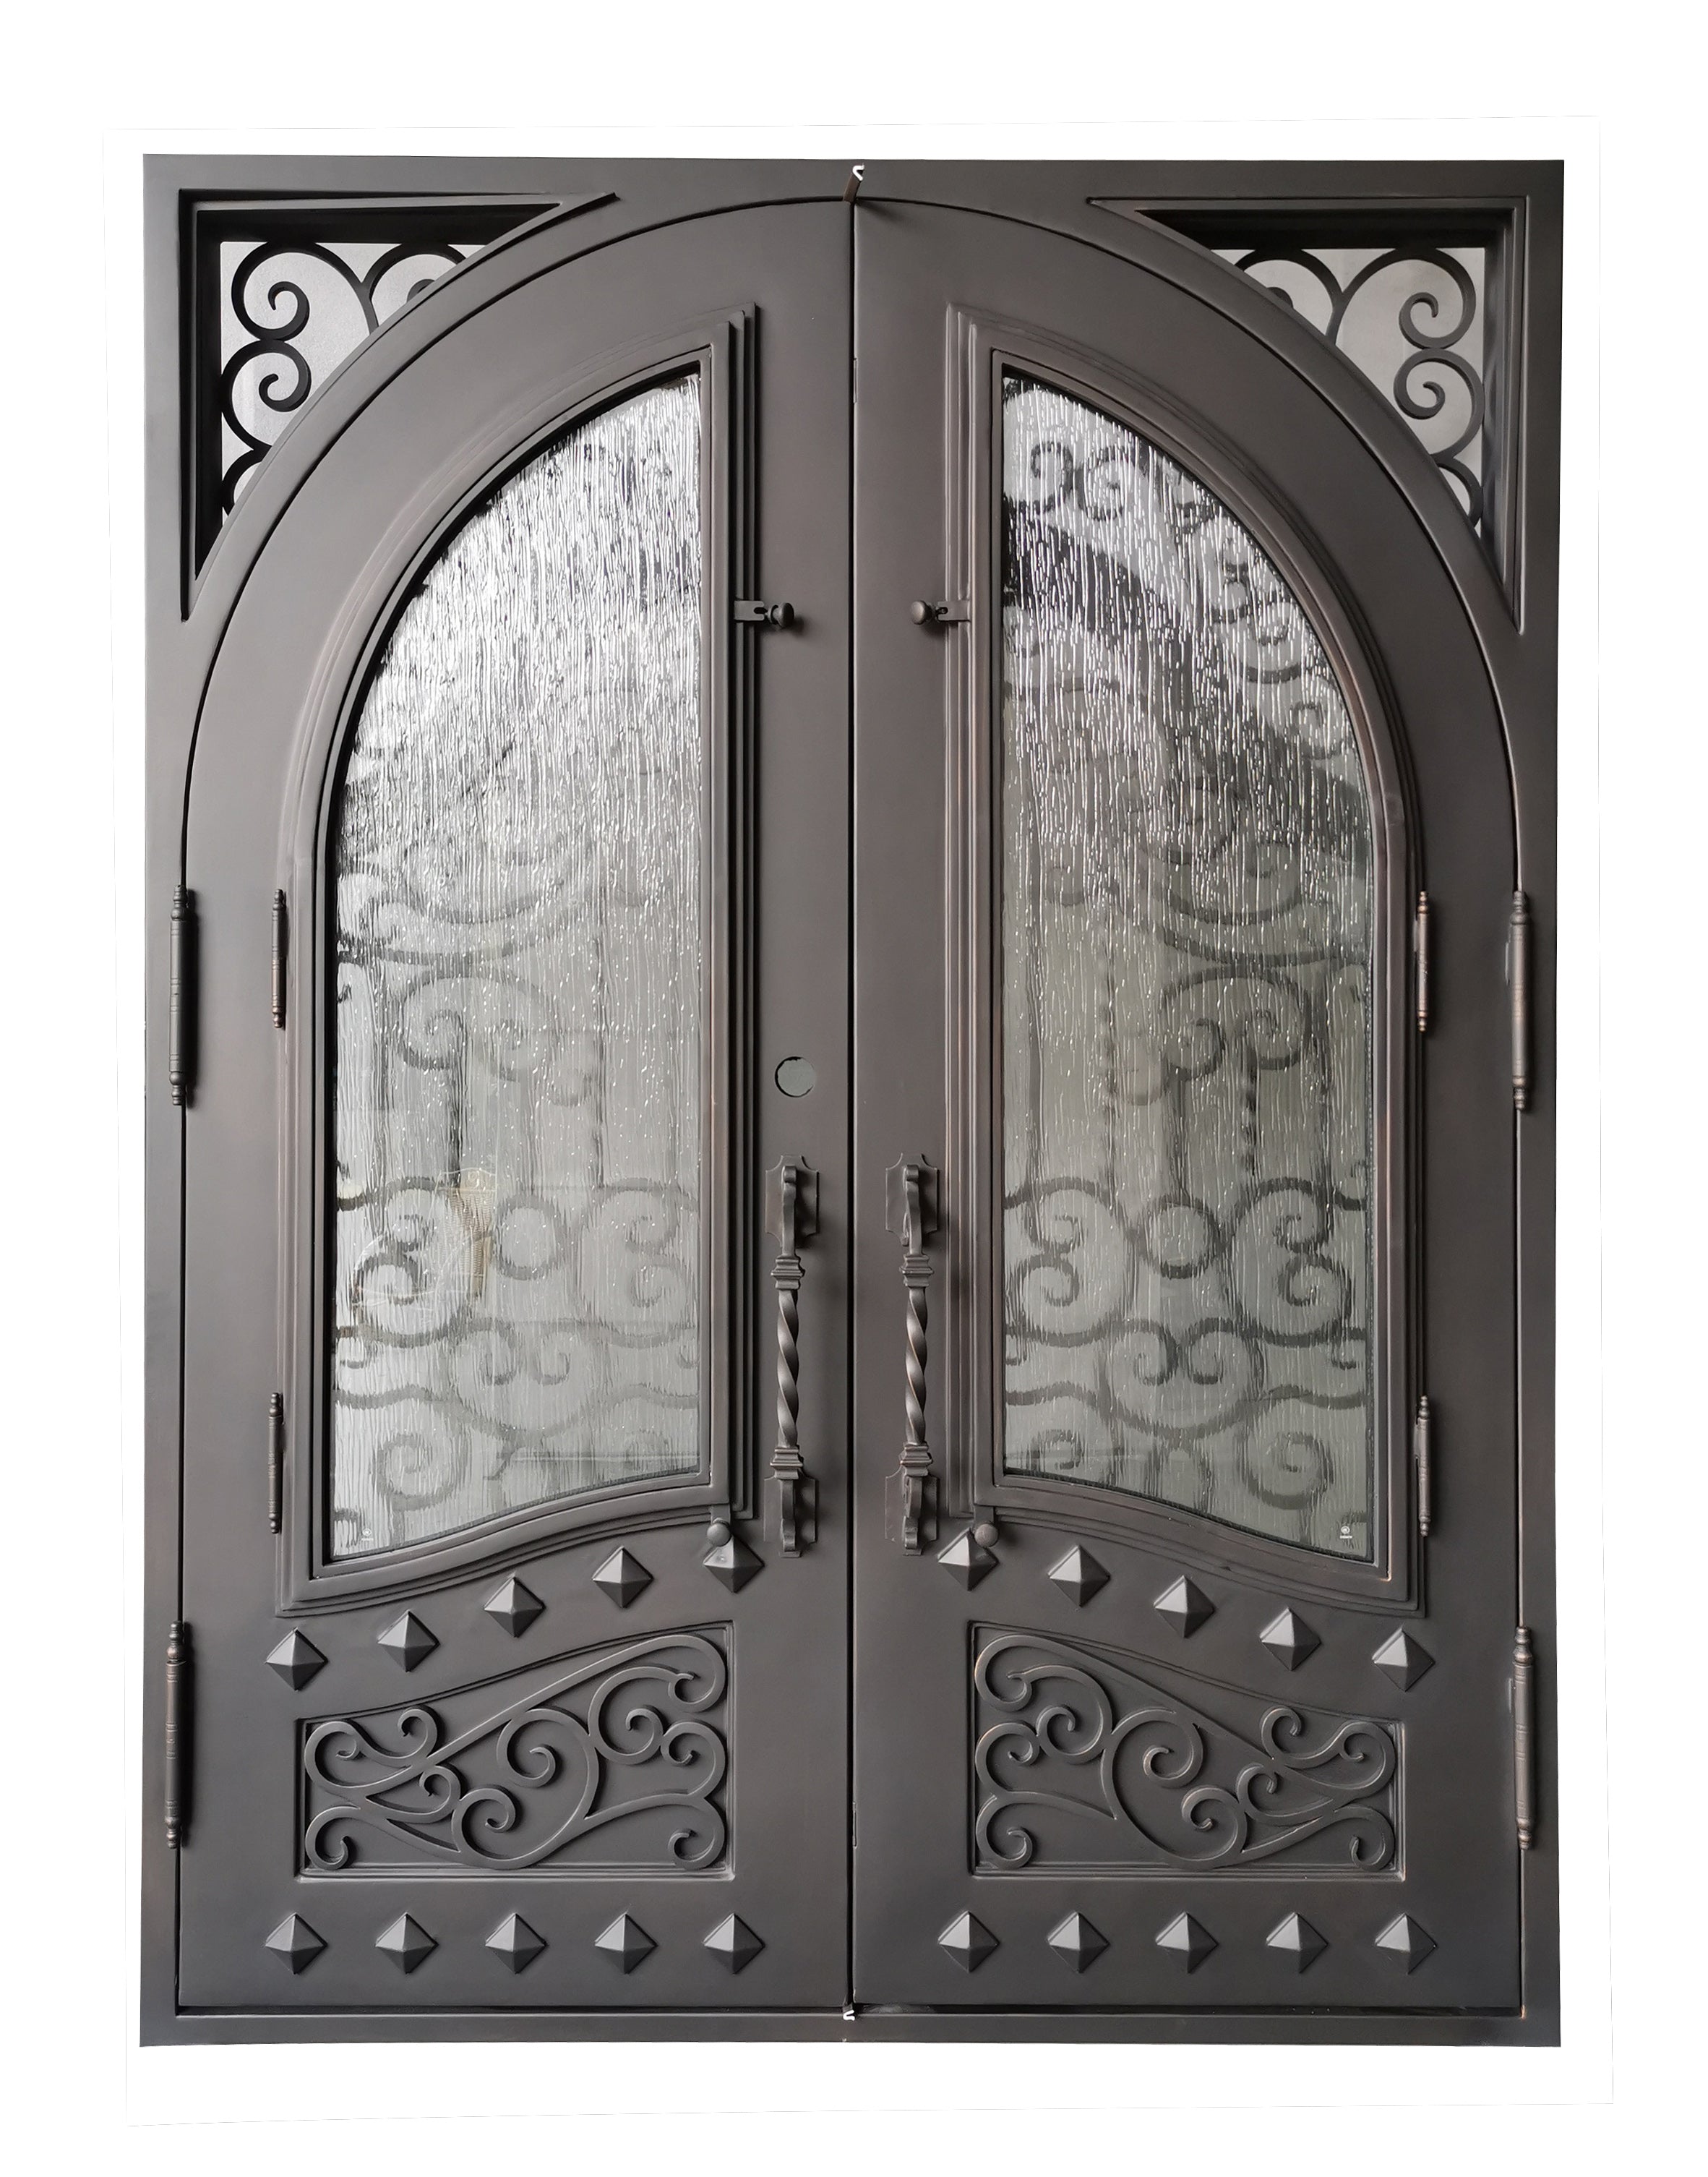 Canton Model Double Front Entry Iron Door With Tempered Rain Glass Dark Bronze Finish - AAWAIZ IMPORTS